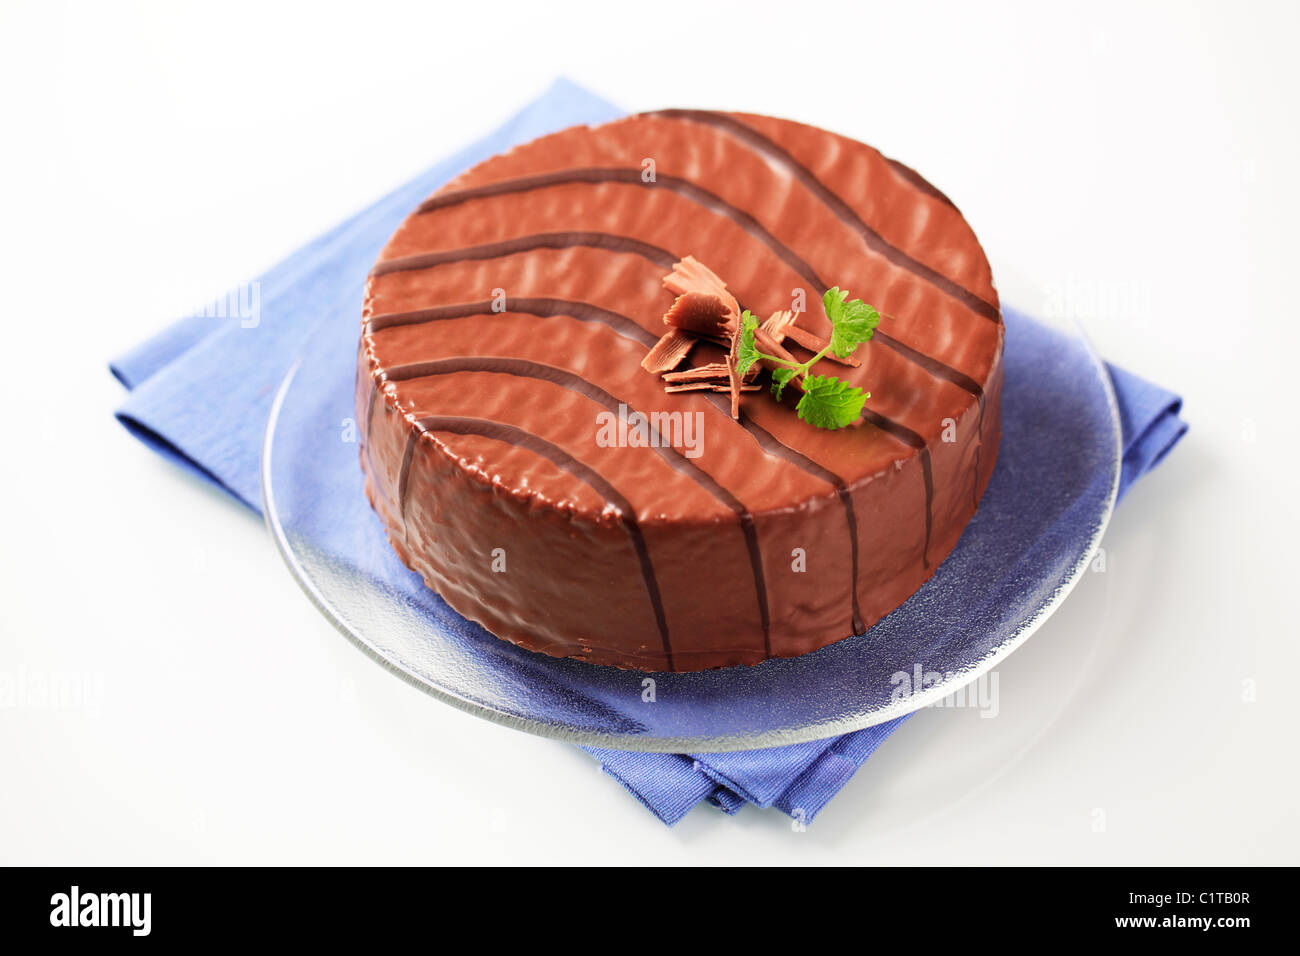 Nut cake glazed with chocolate - studio Stock Photo